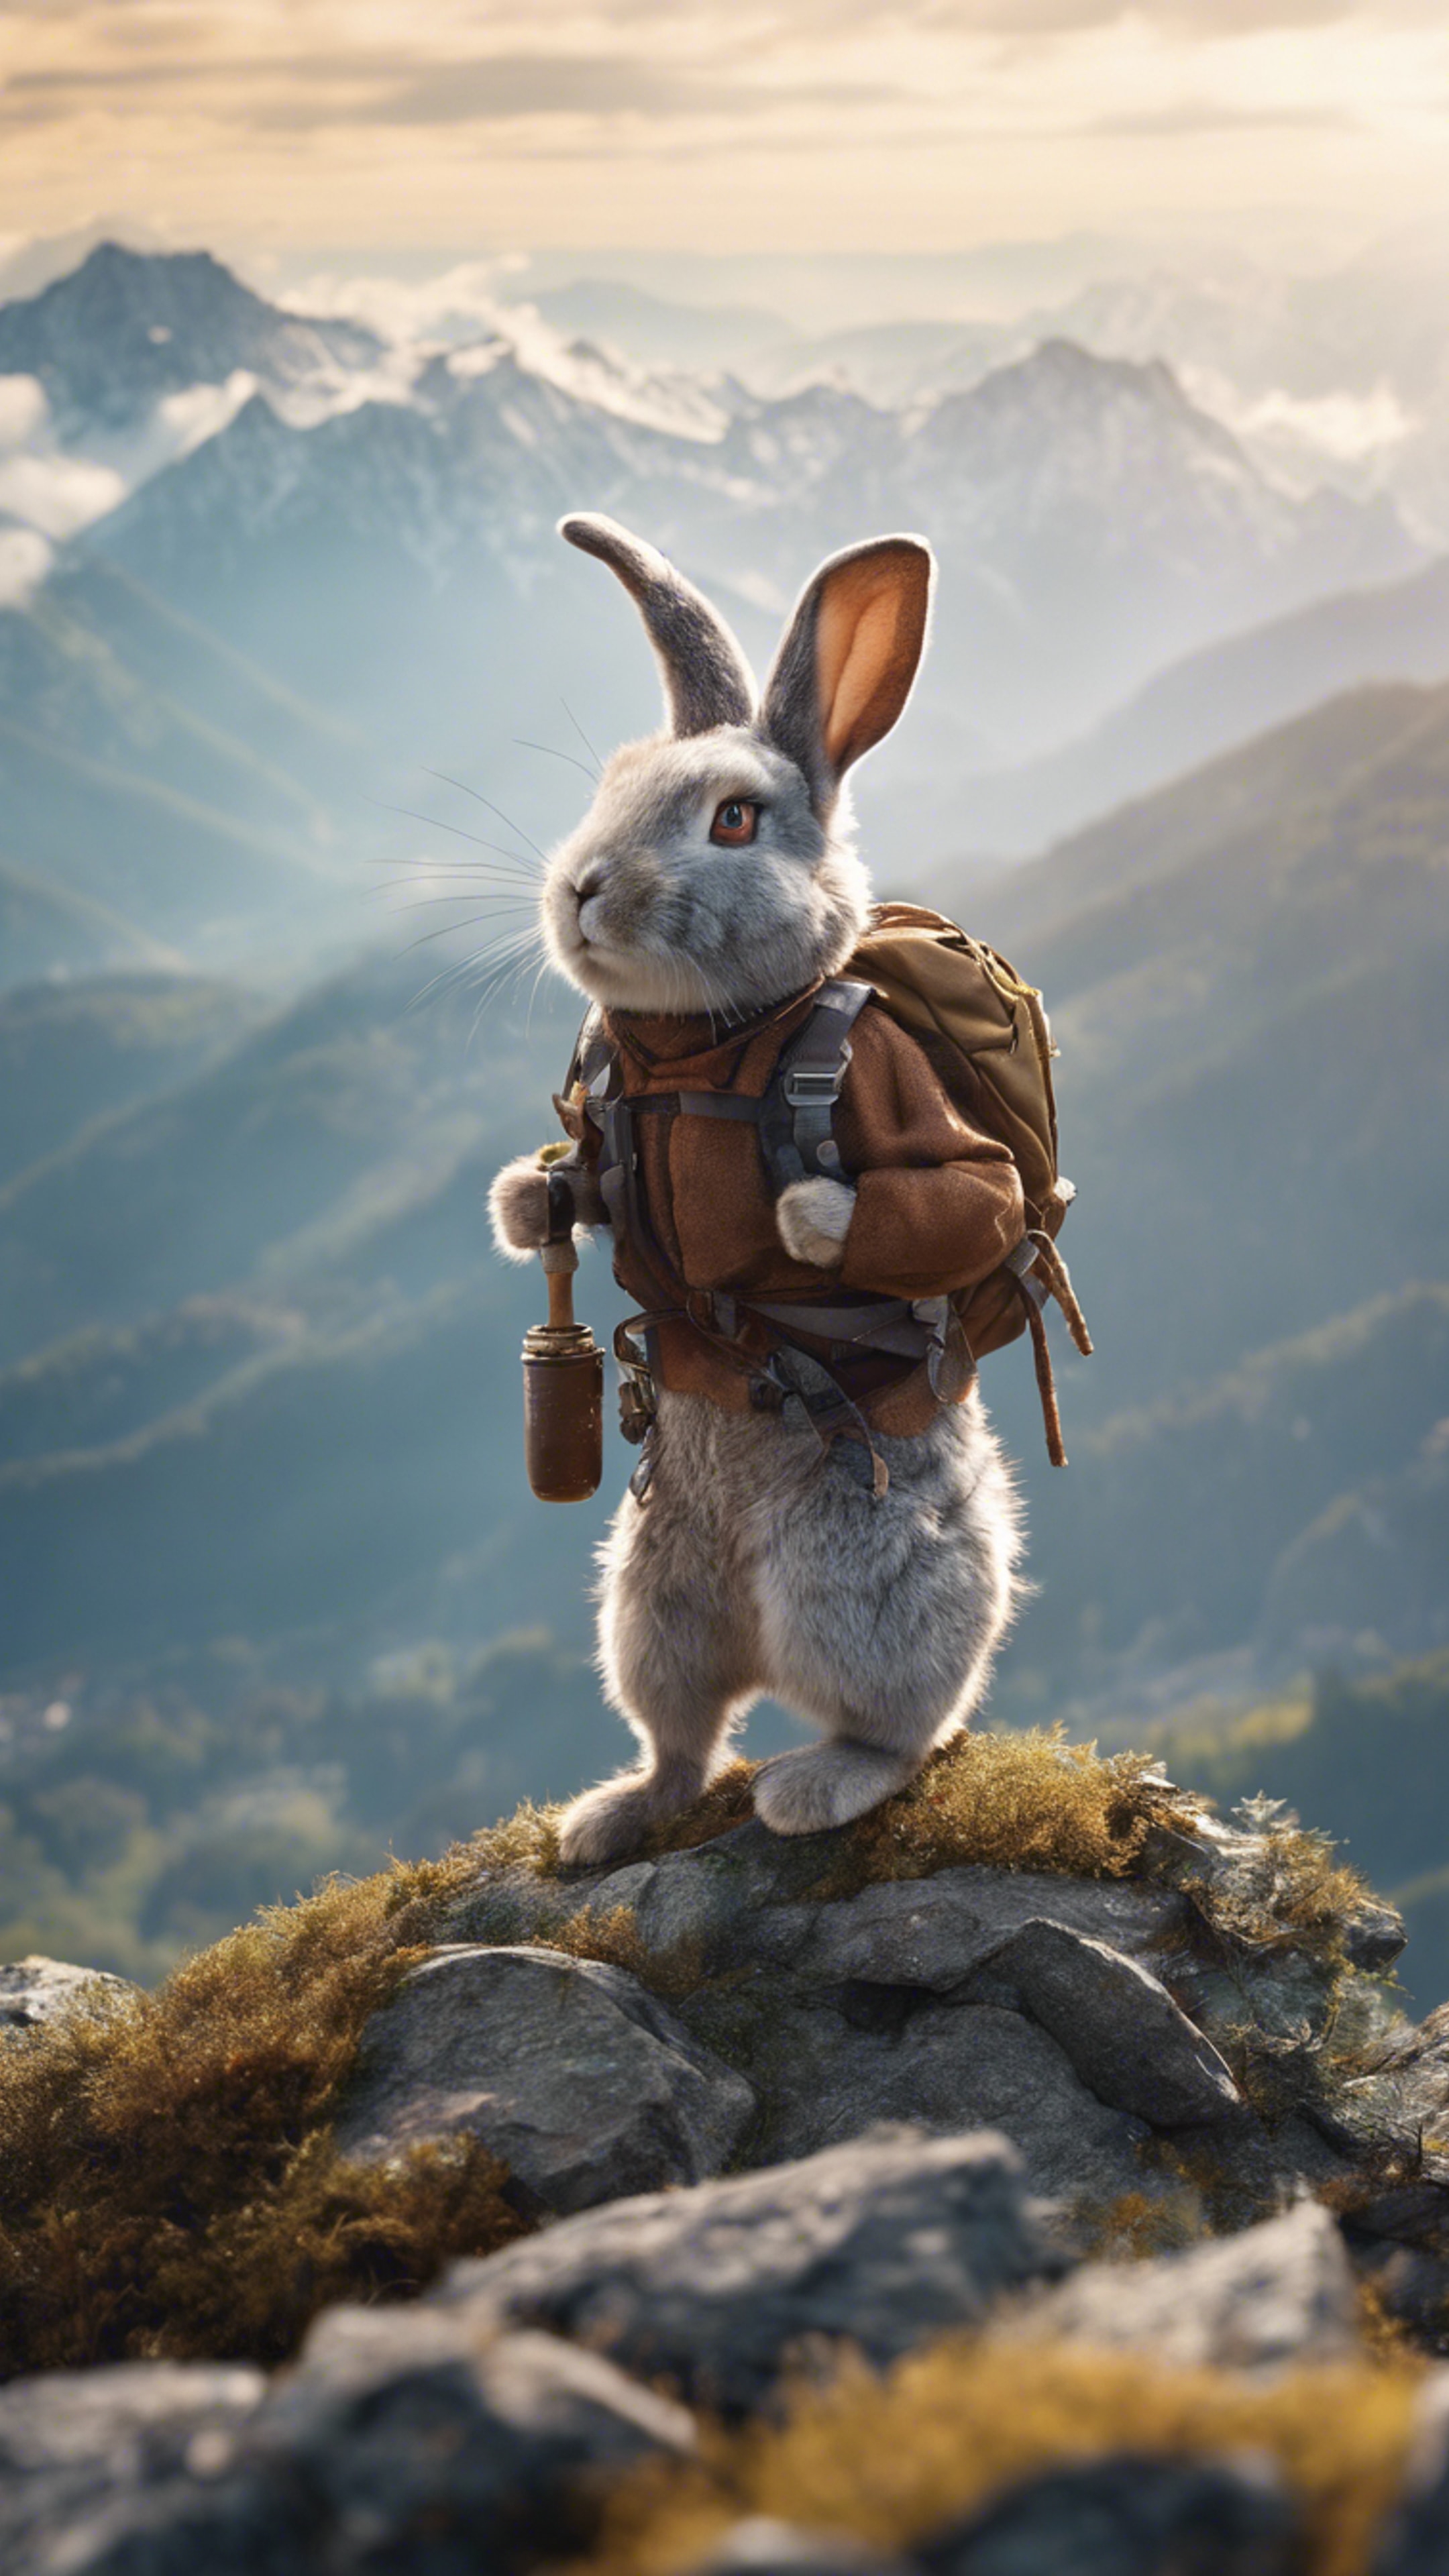 A Rabbit mountaineer conquering a treacherous peak. Wallpaper[faadaab6eec04e17a877]